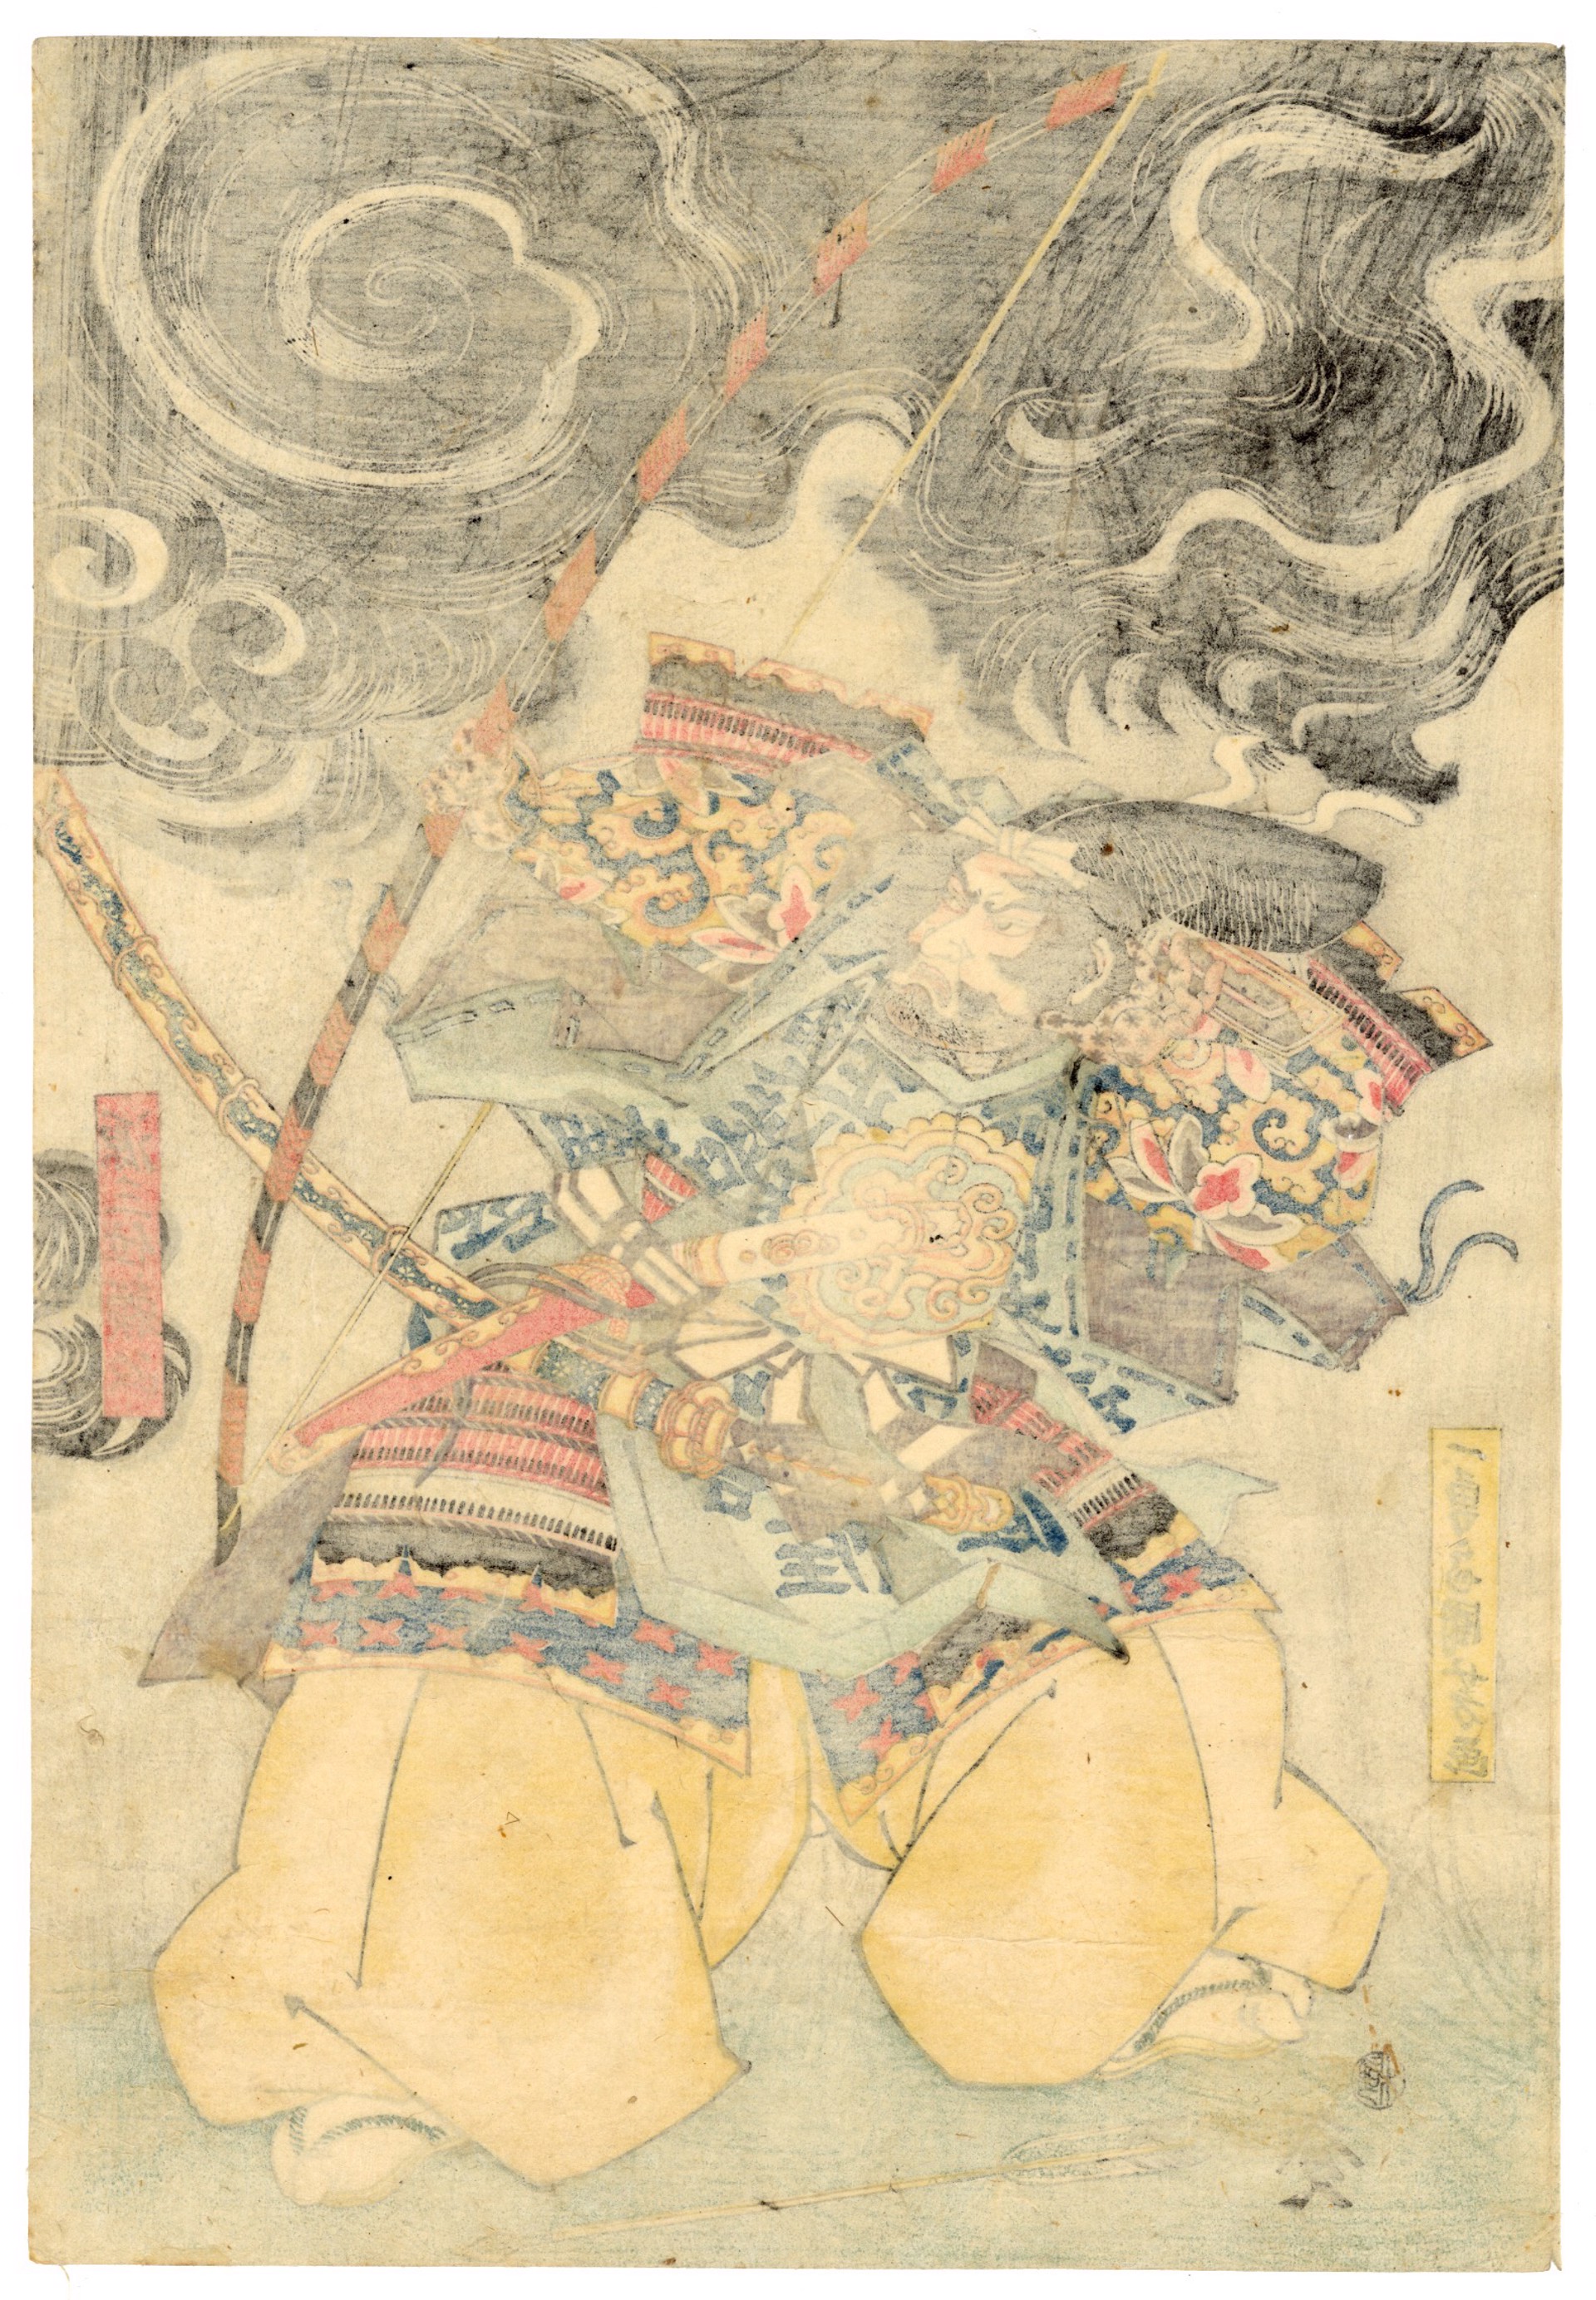 The Nue, in a swirling Black Cloud, is Shot Down by Gen Sammi Yorimasa by Kuniyoshi